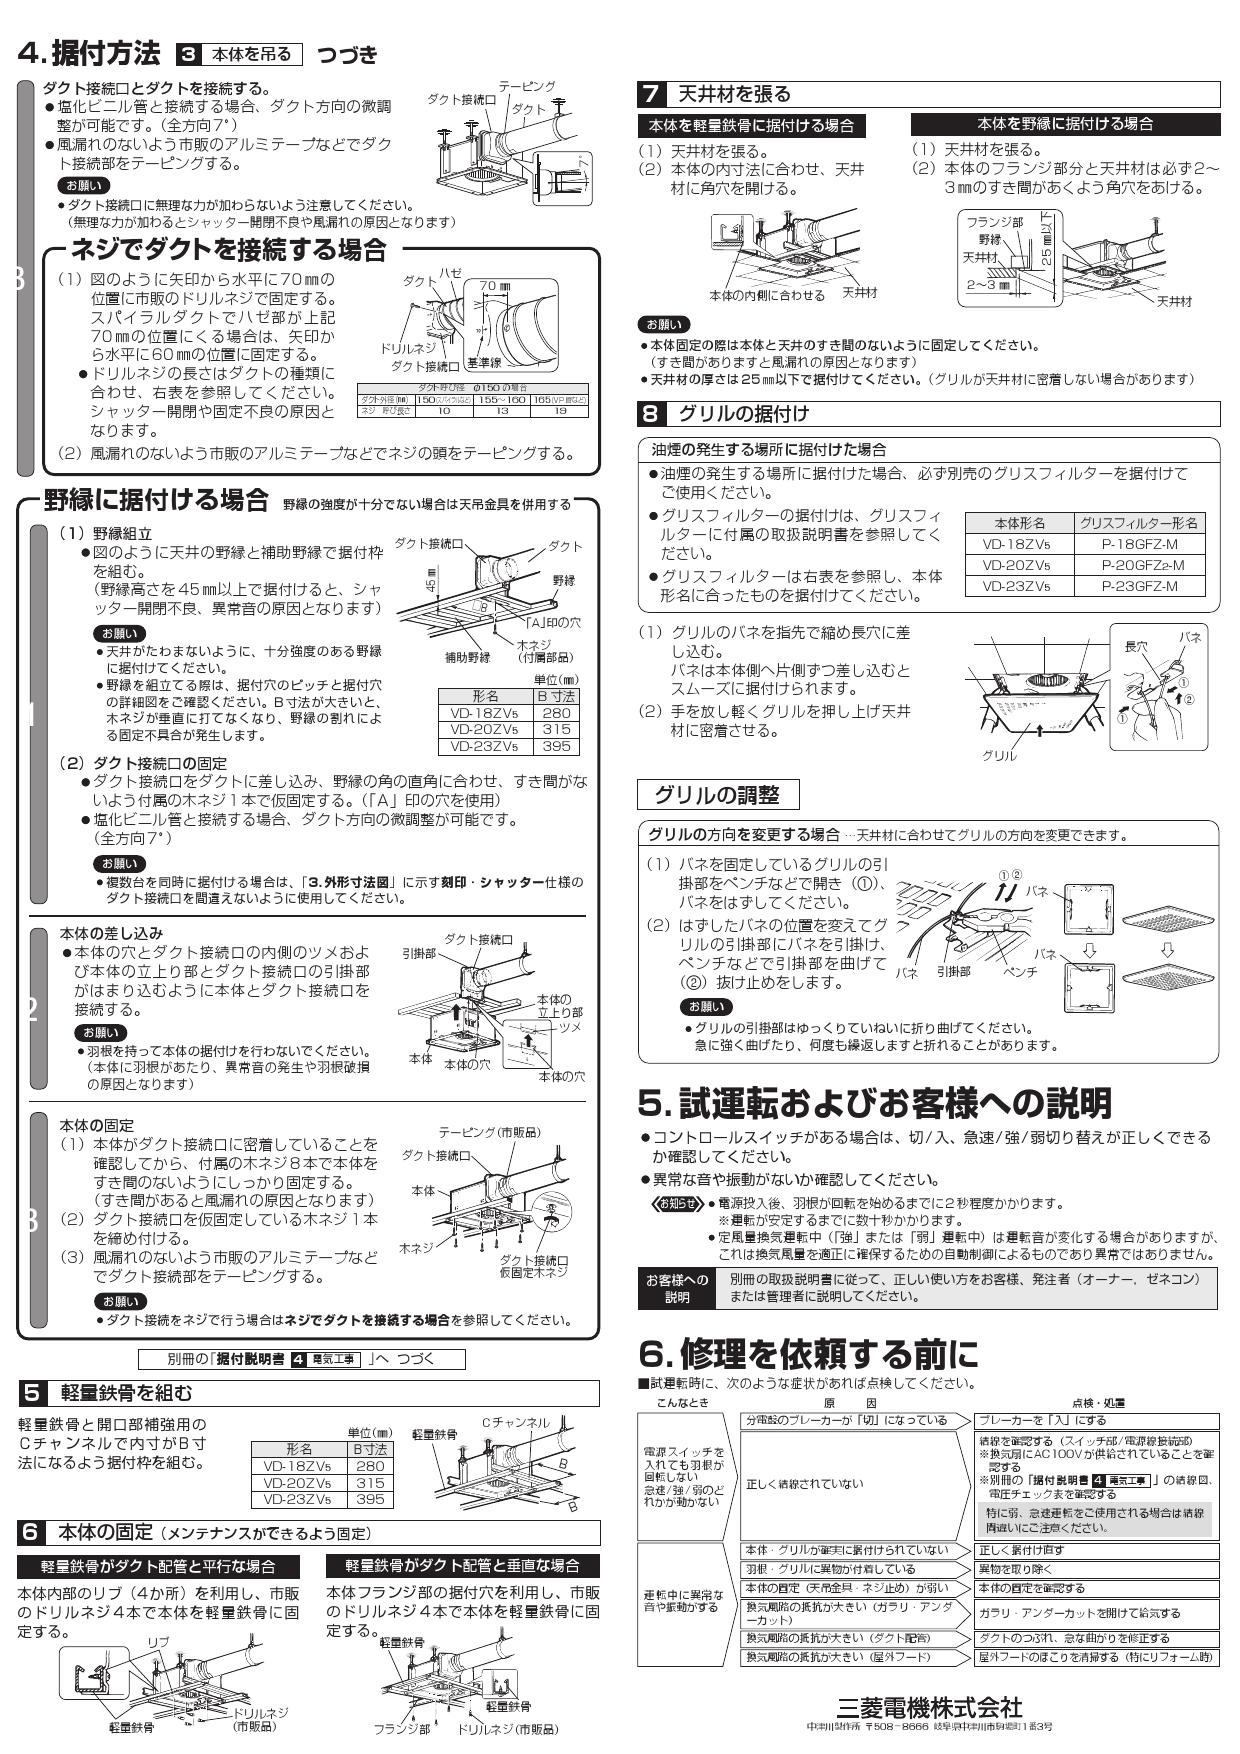 三菱電機 VD-20ZV5取扱説明書 施工説明書 納入仕様図 | 通販 プロ 